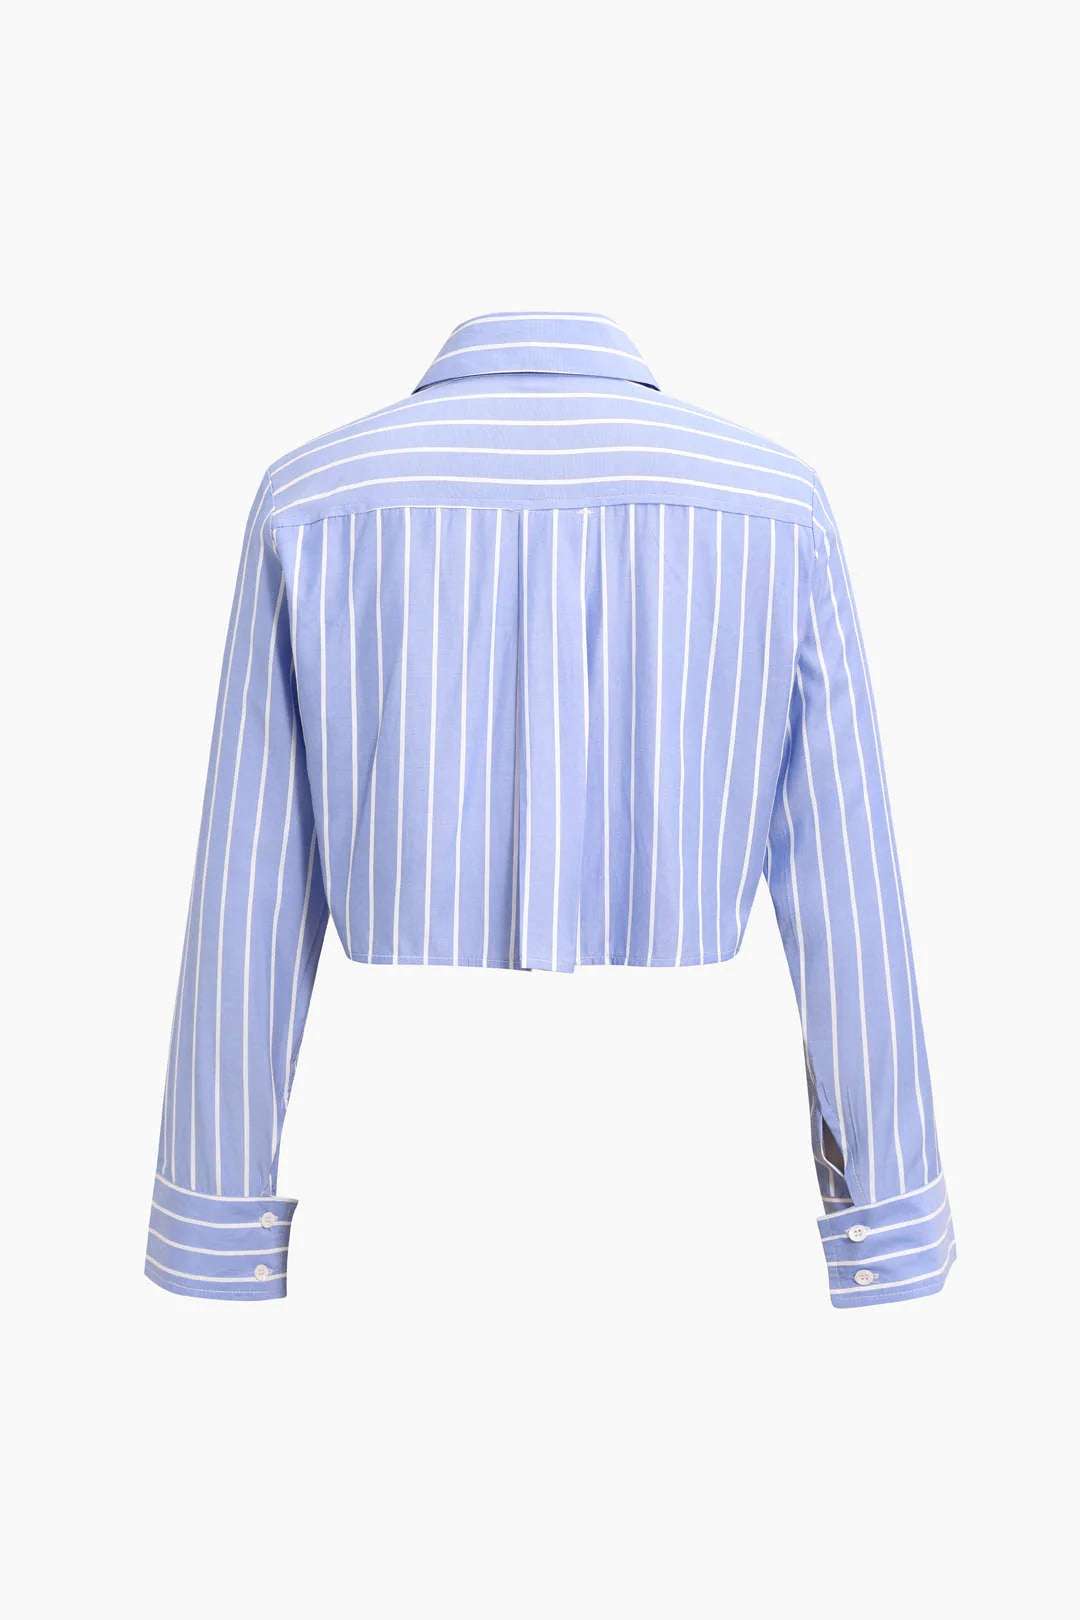 Fashionable short shirts, Stylish lapel shirts, Women's striped shirts - available at Sparq Mart